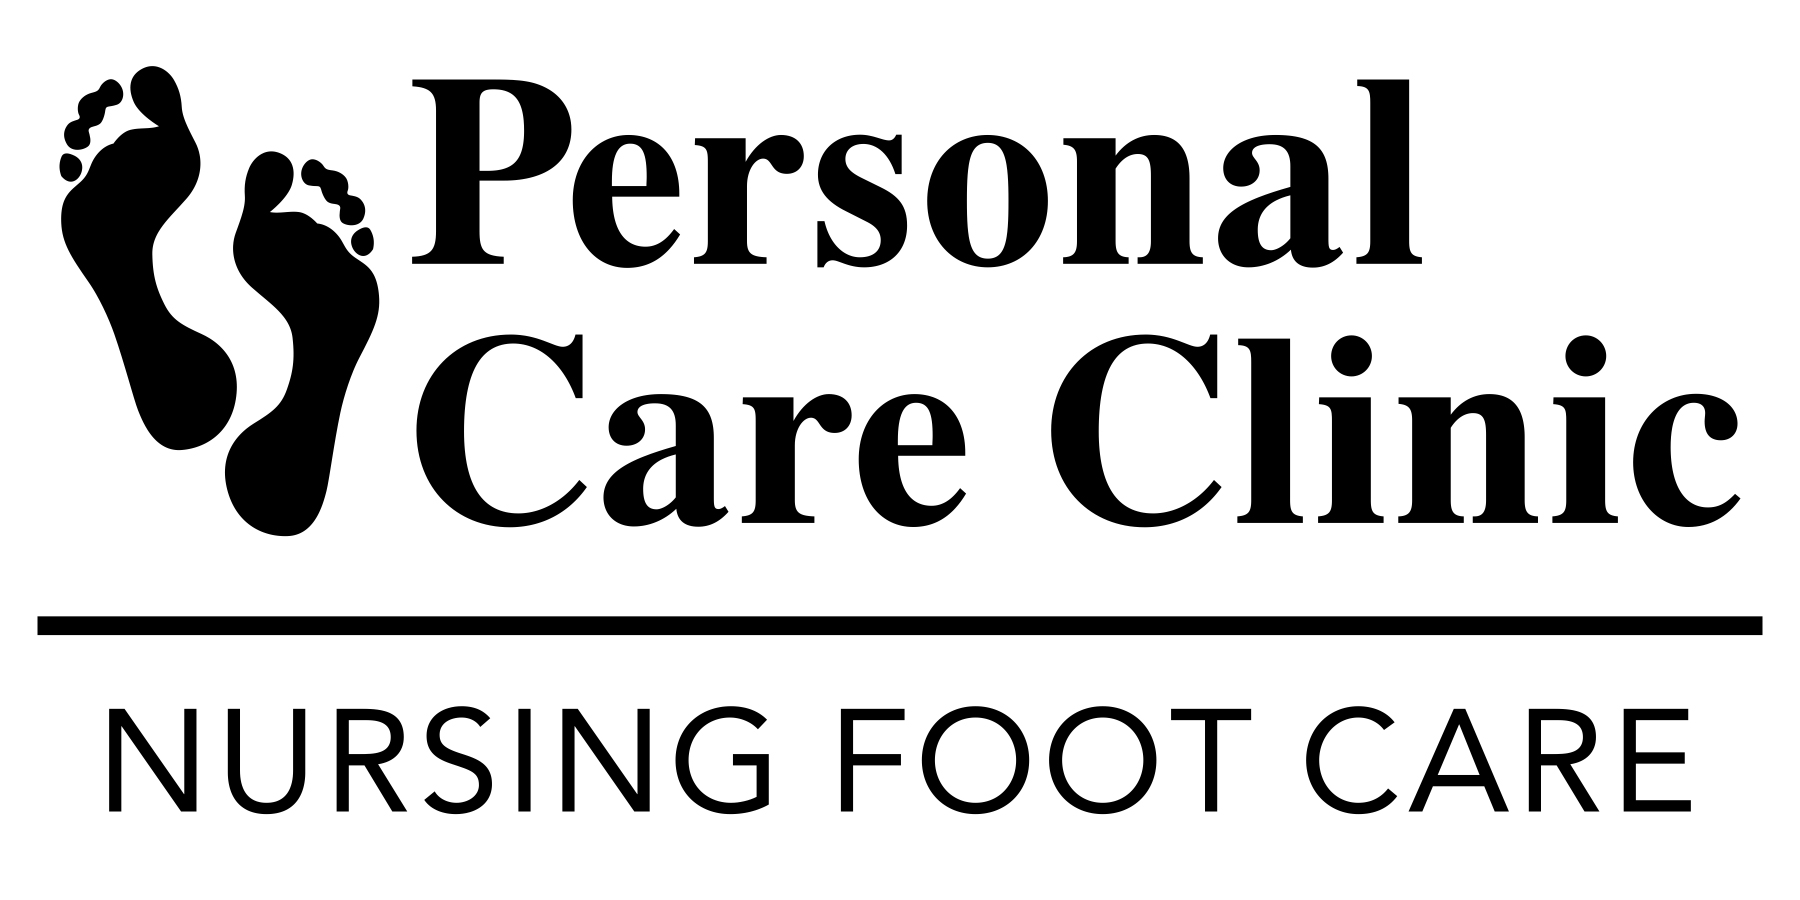 Personal Care Clinic Nursing Foot Care logo